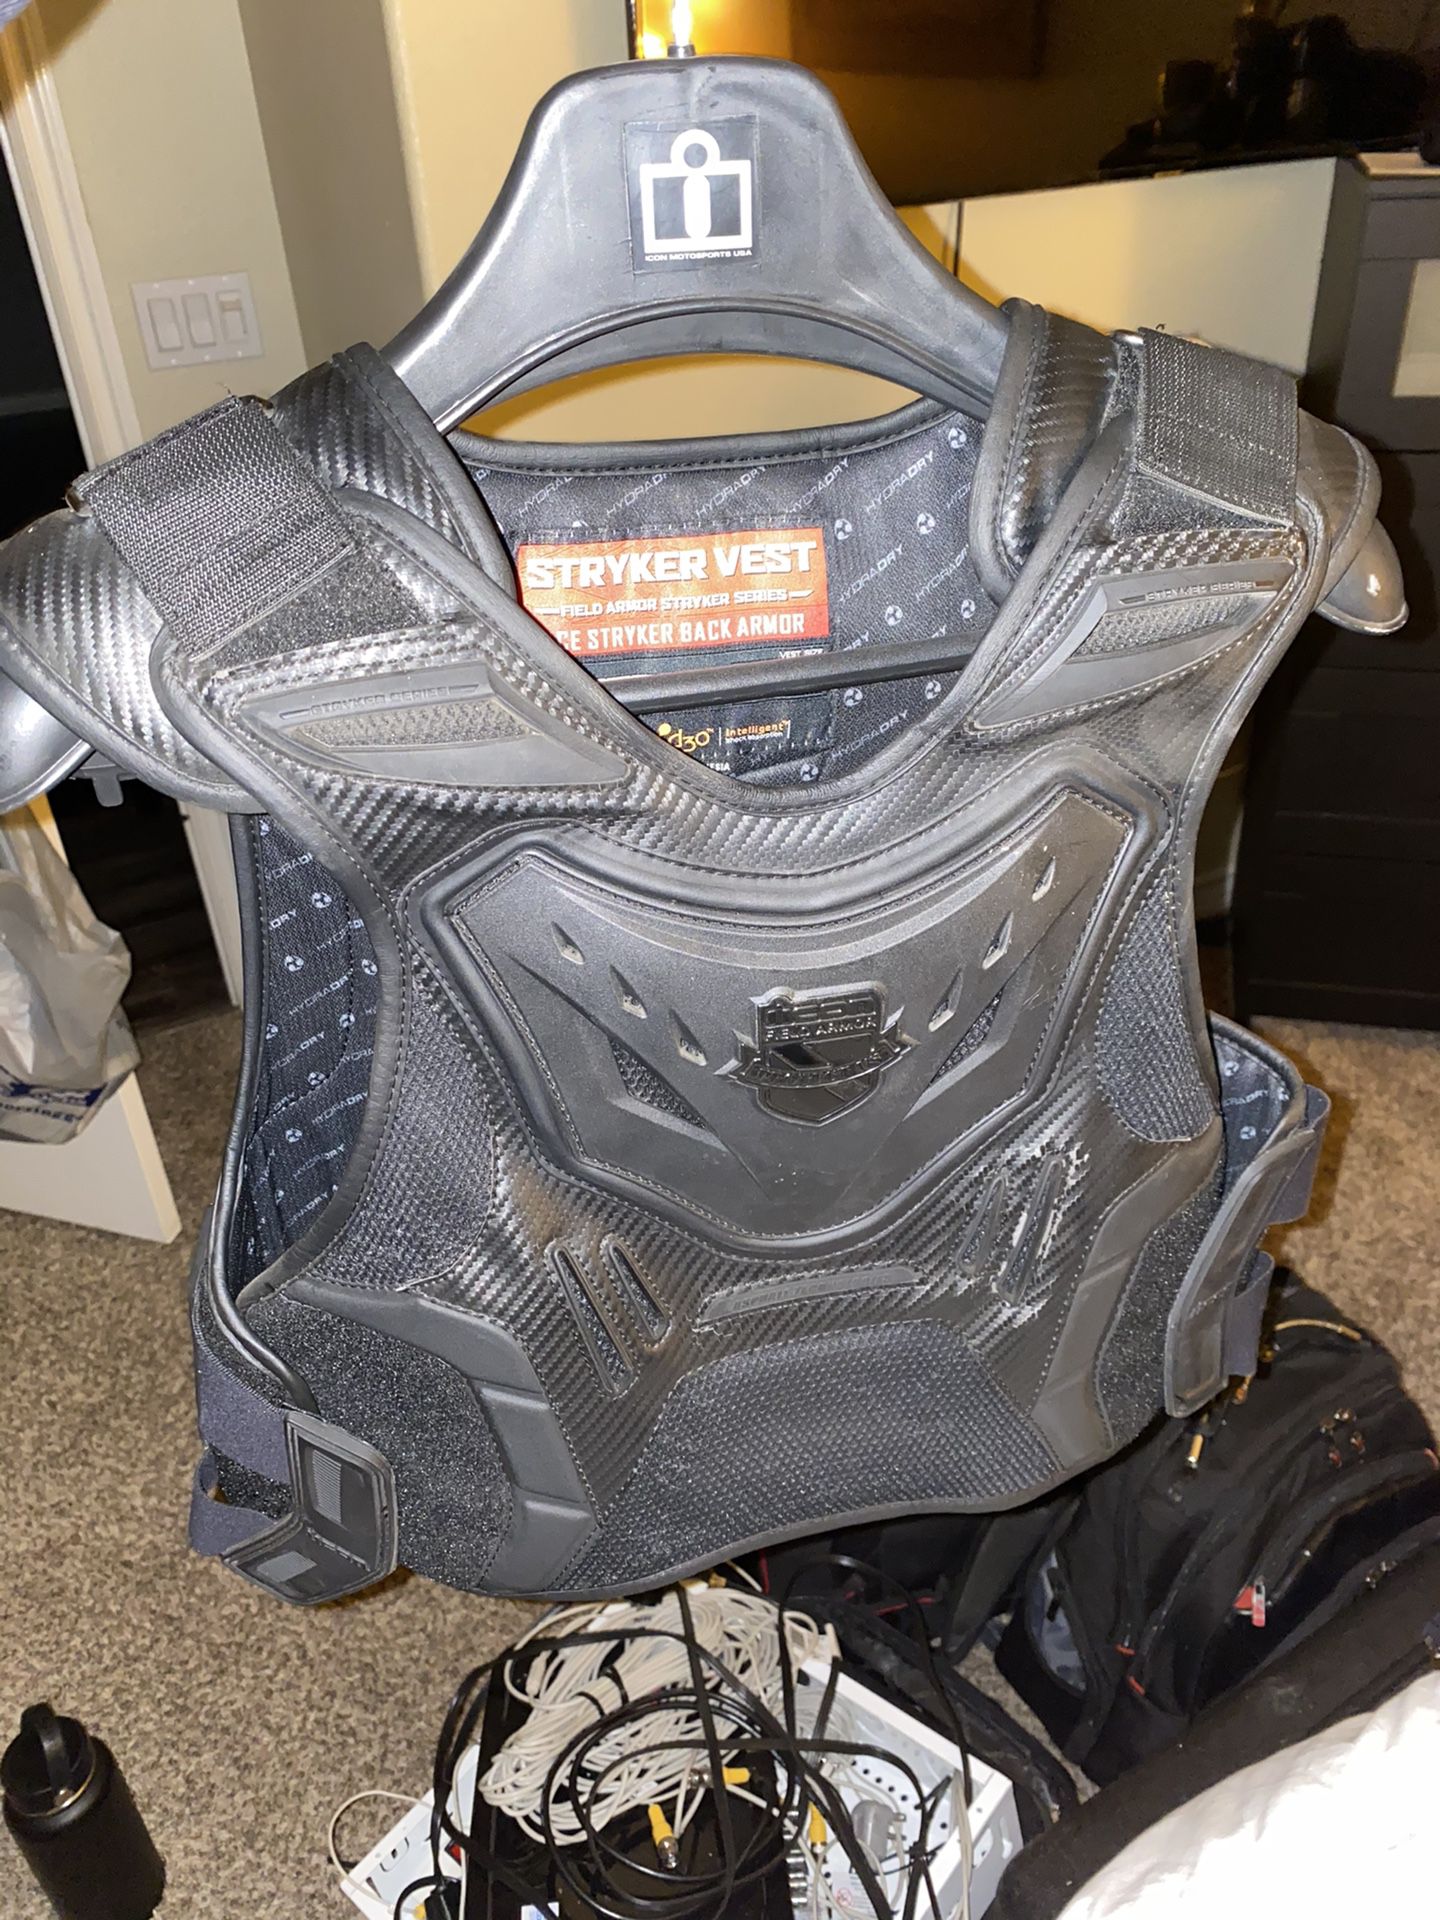 Motorcycle Stryker vest